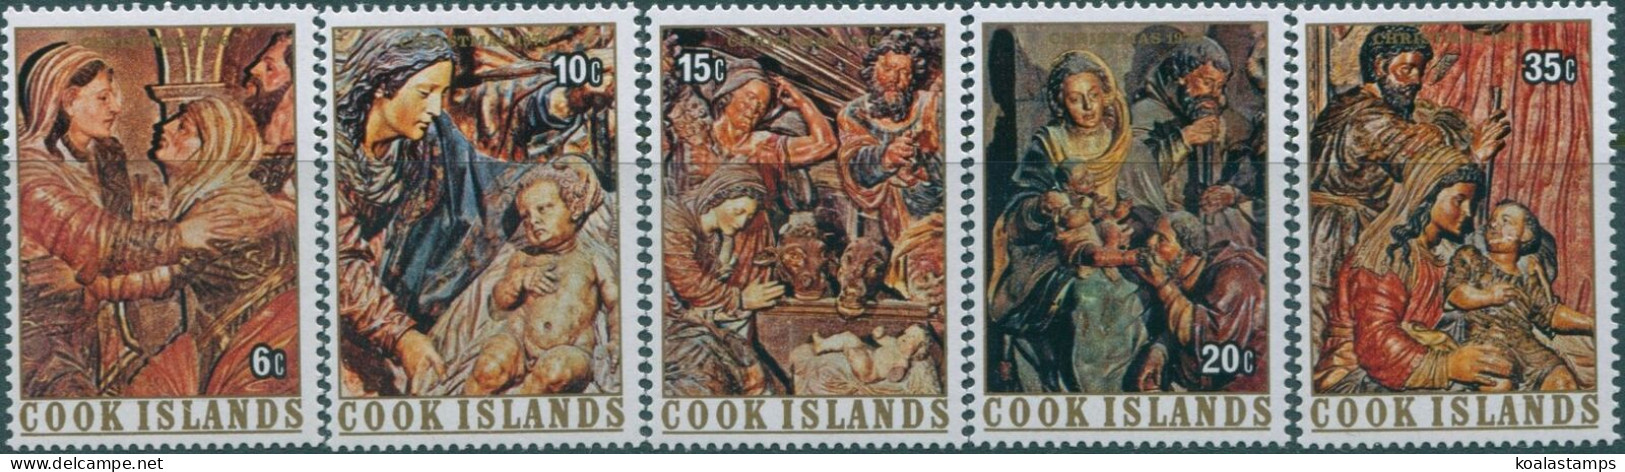 Cook Islands 1976 SG556-560 Christmas Set MNH - Islas Cook